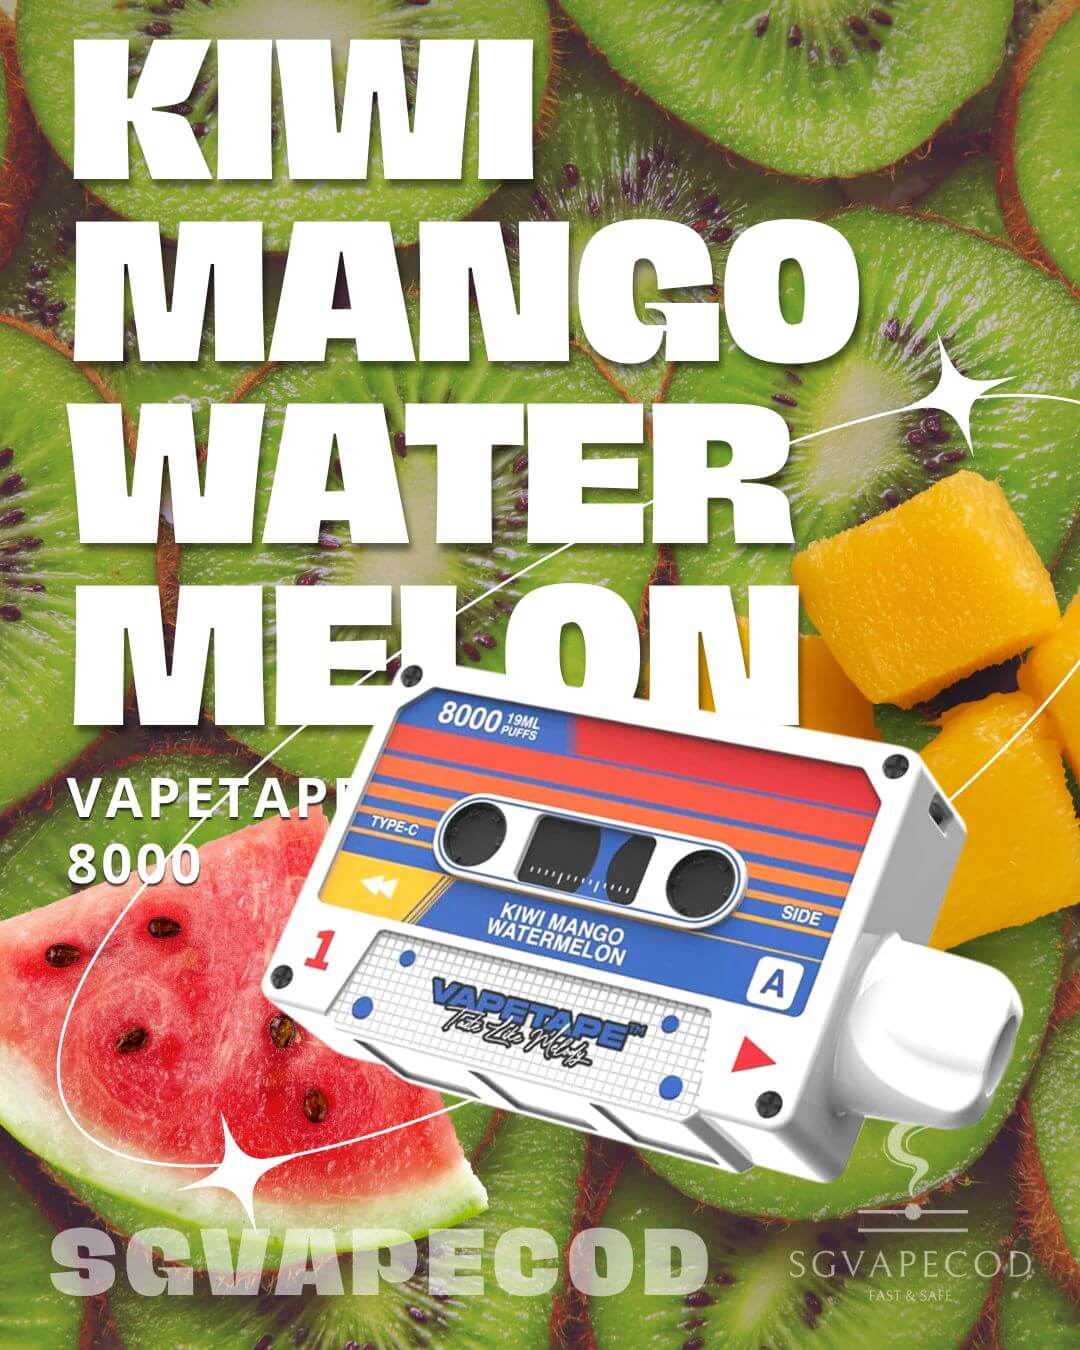 Vapetape-8000-Kiwi-Mango-Watermelon-(SG VAPE COD)